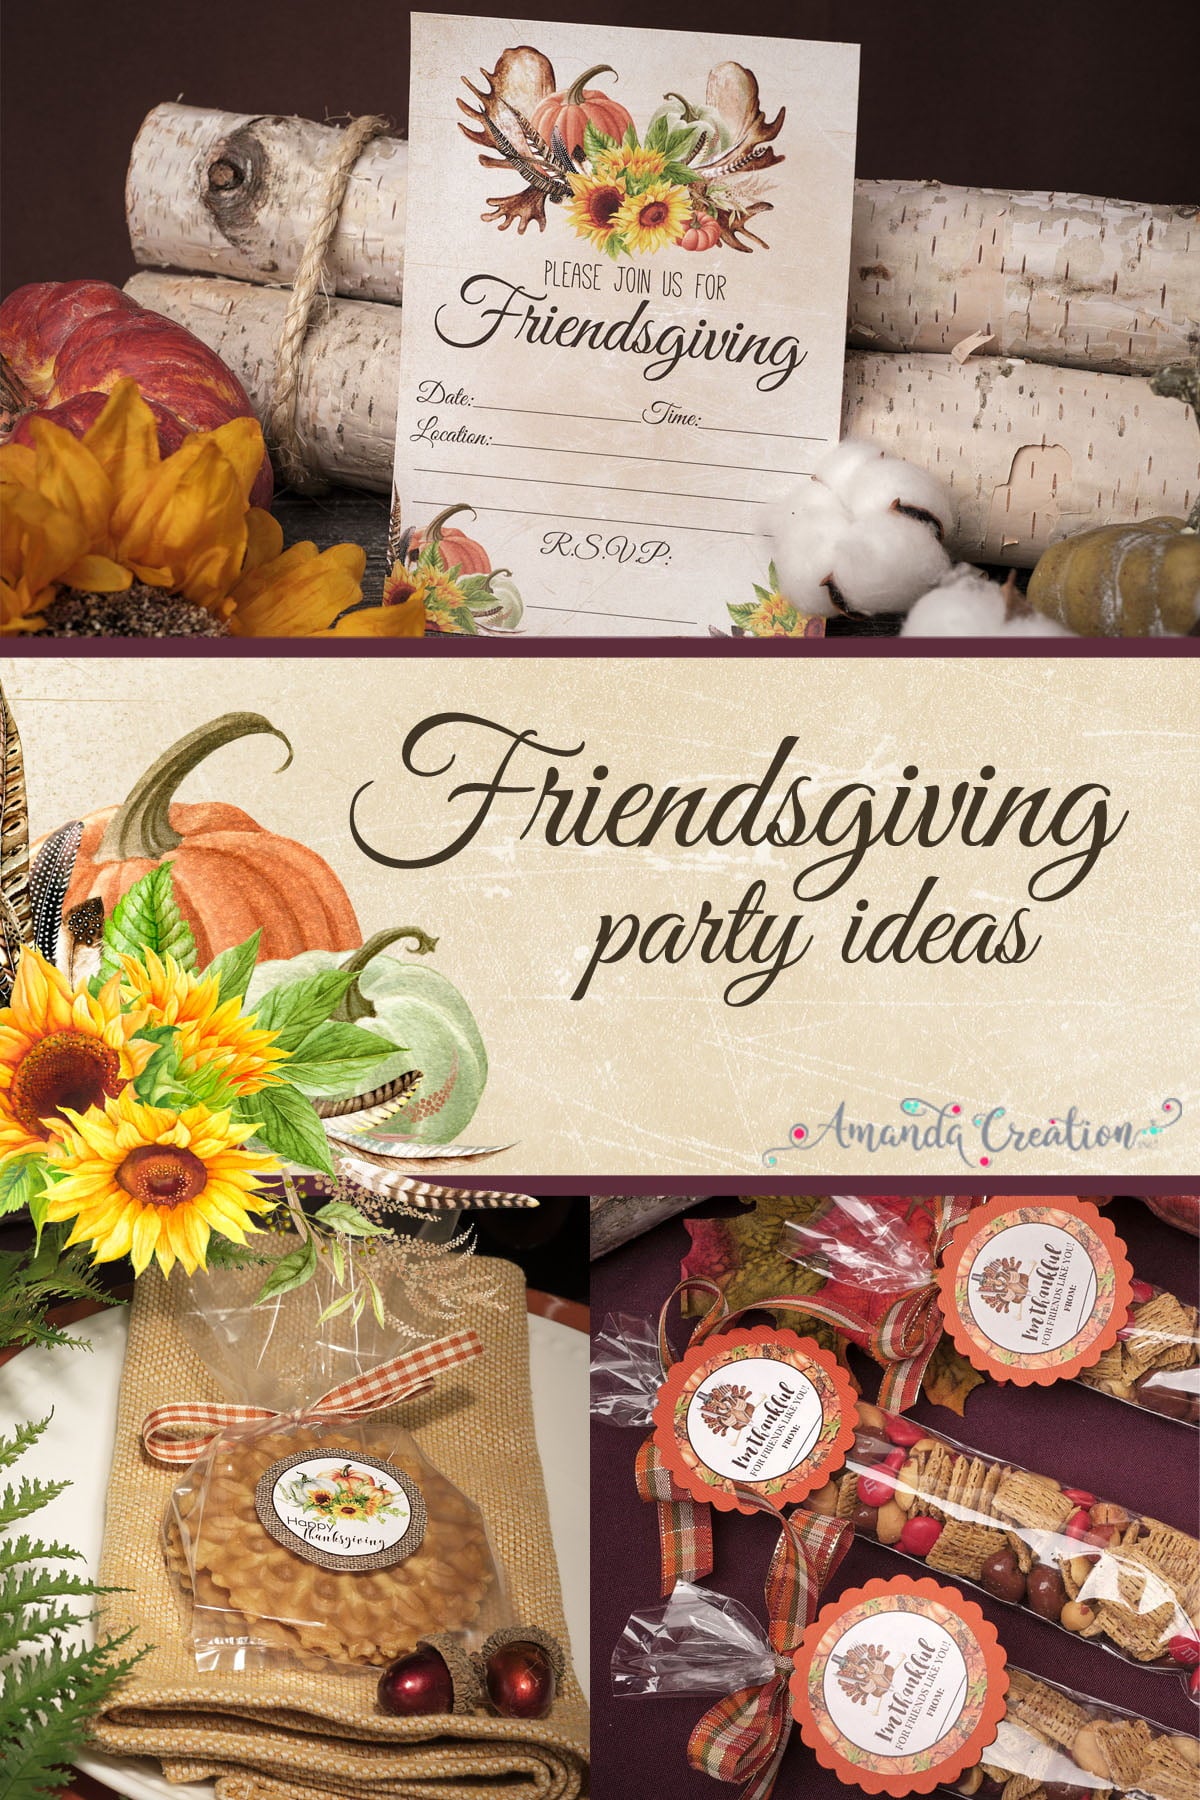 Friendsgiving party ideas